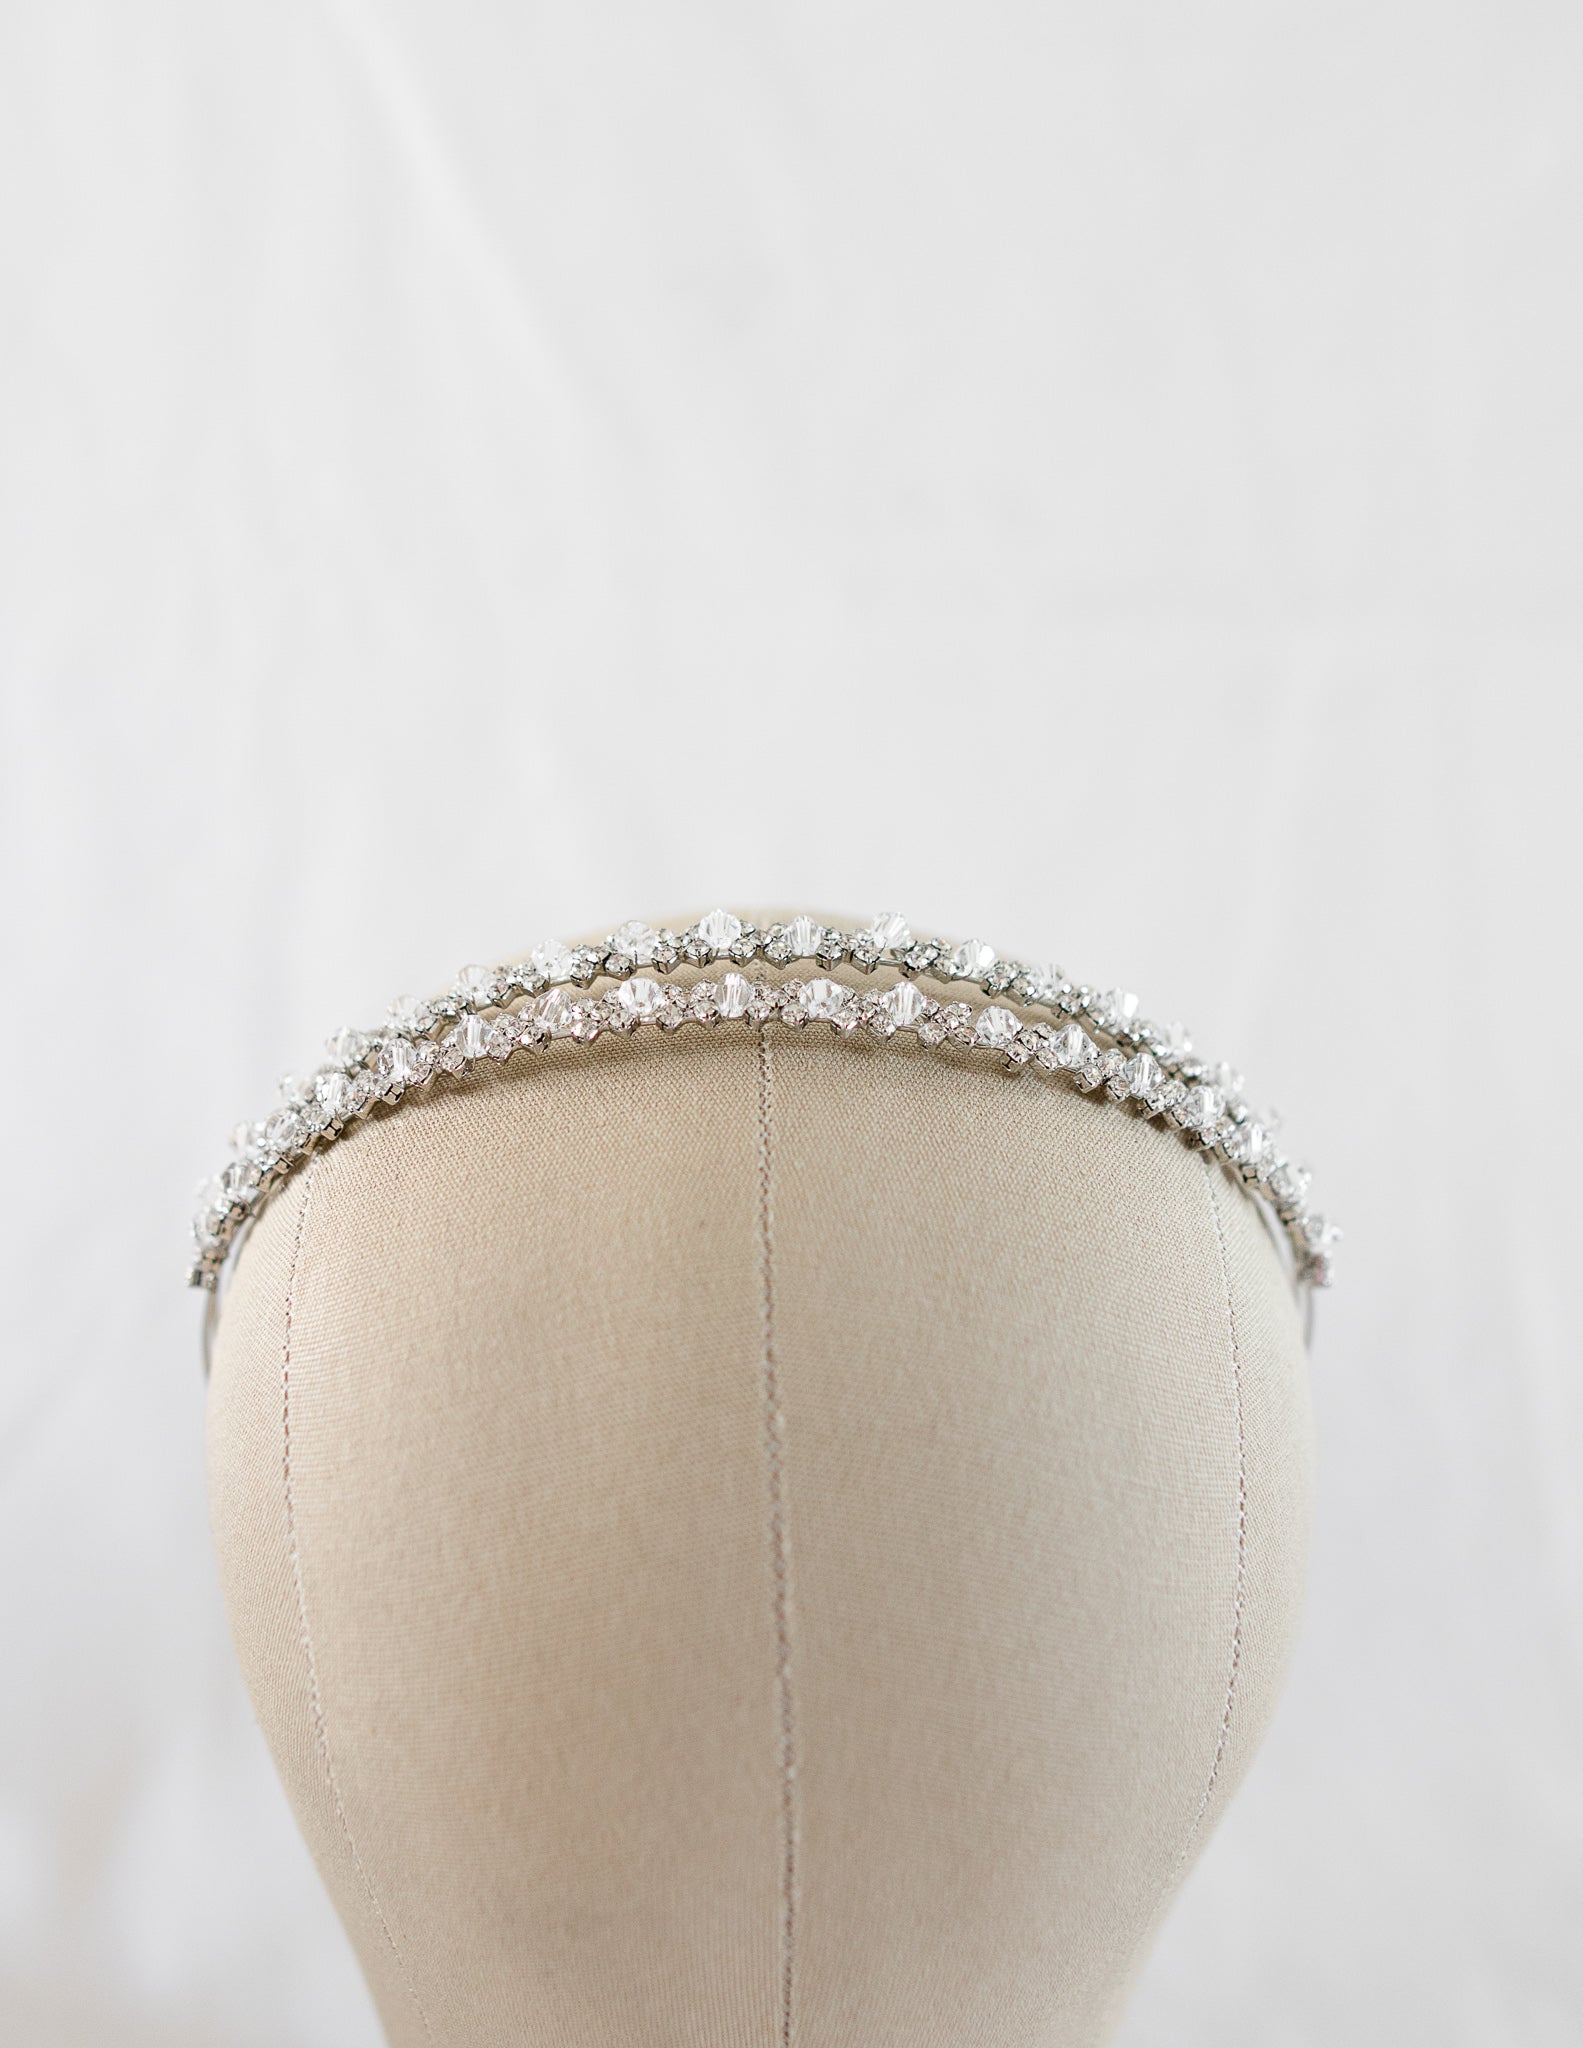 Stylish white headband with dazzling crystal beads